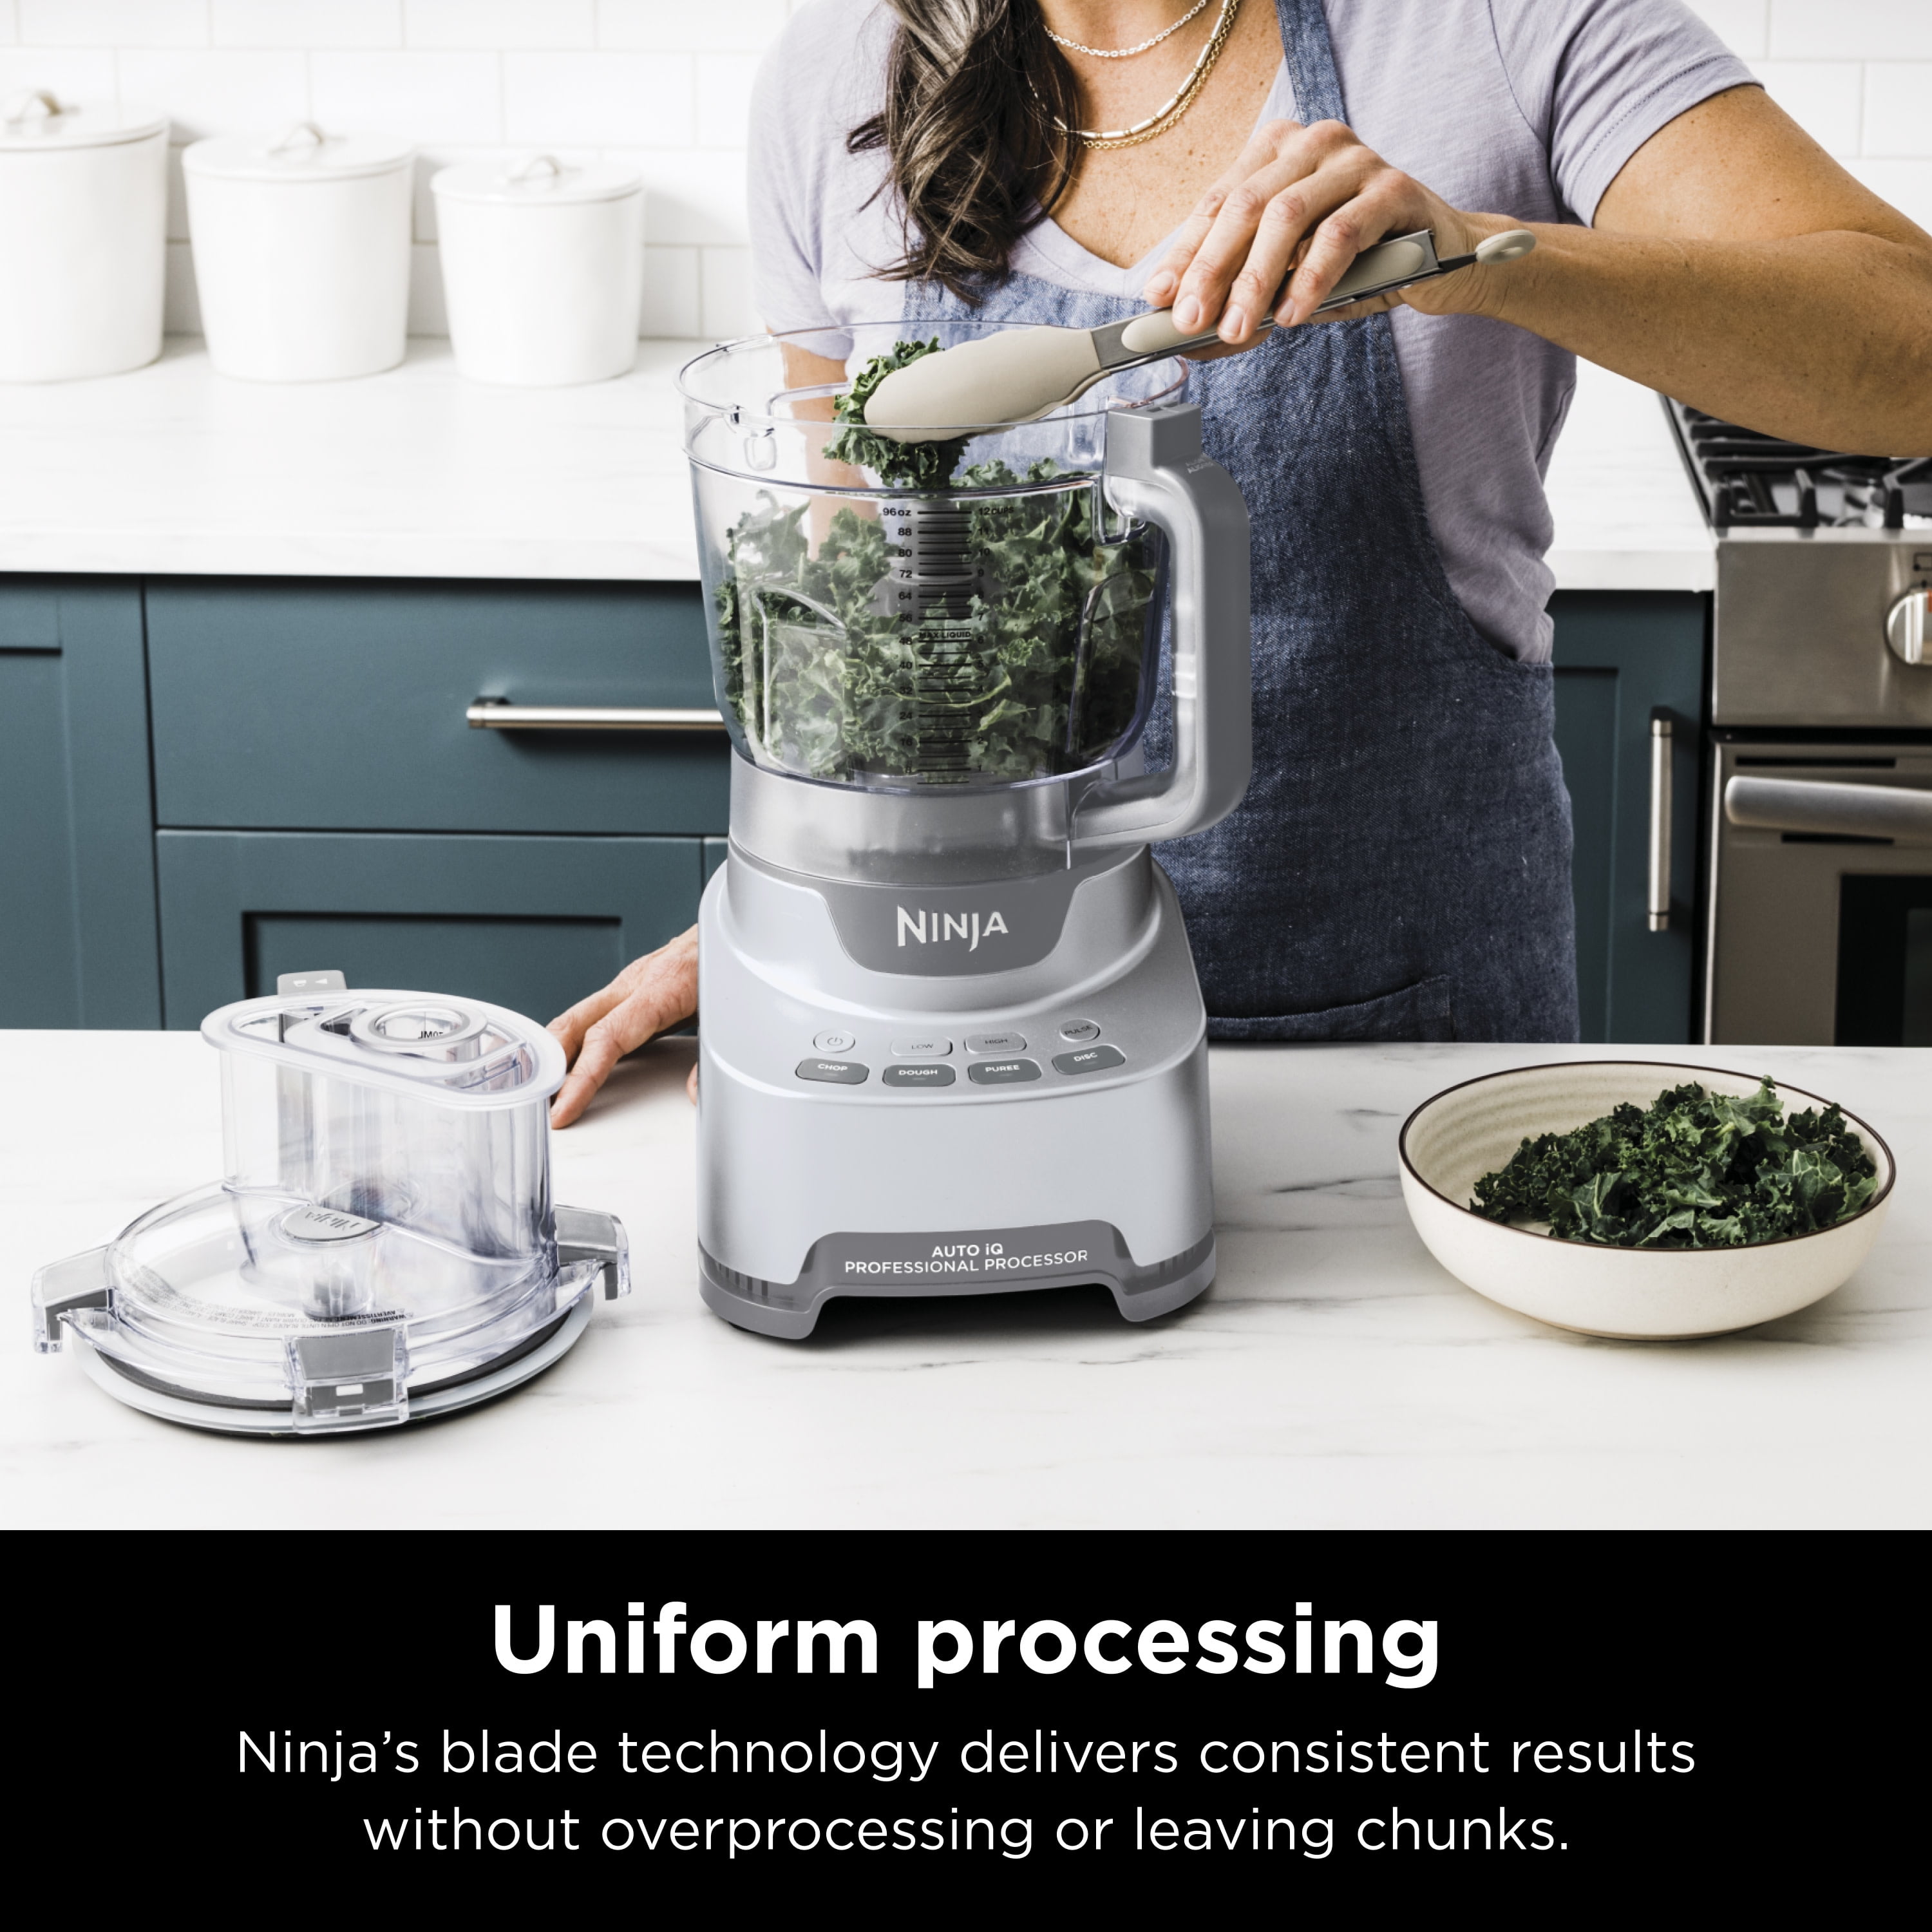 Ninja Professional Xl 12-cup Food Processor & Reviews